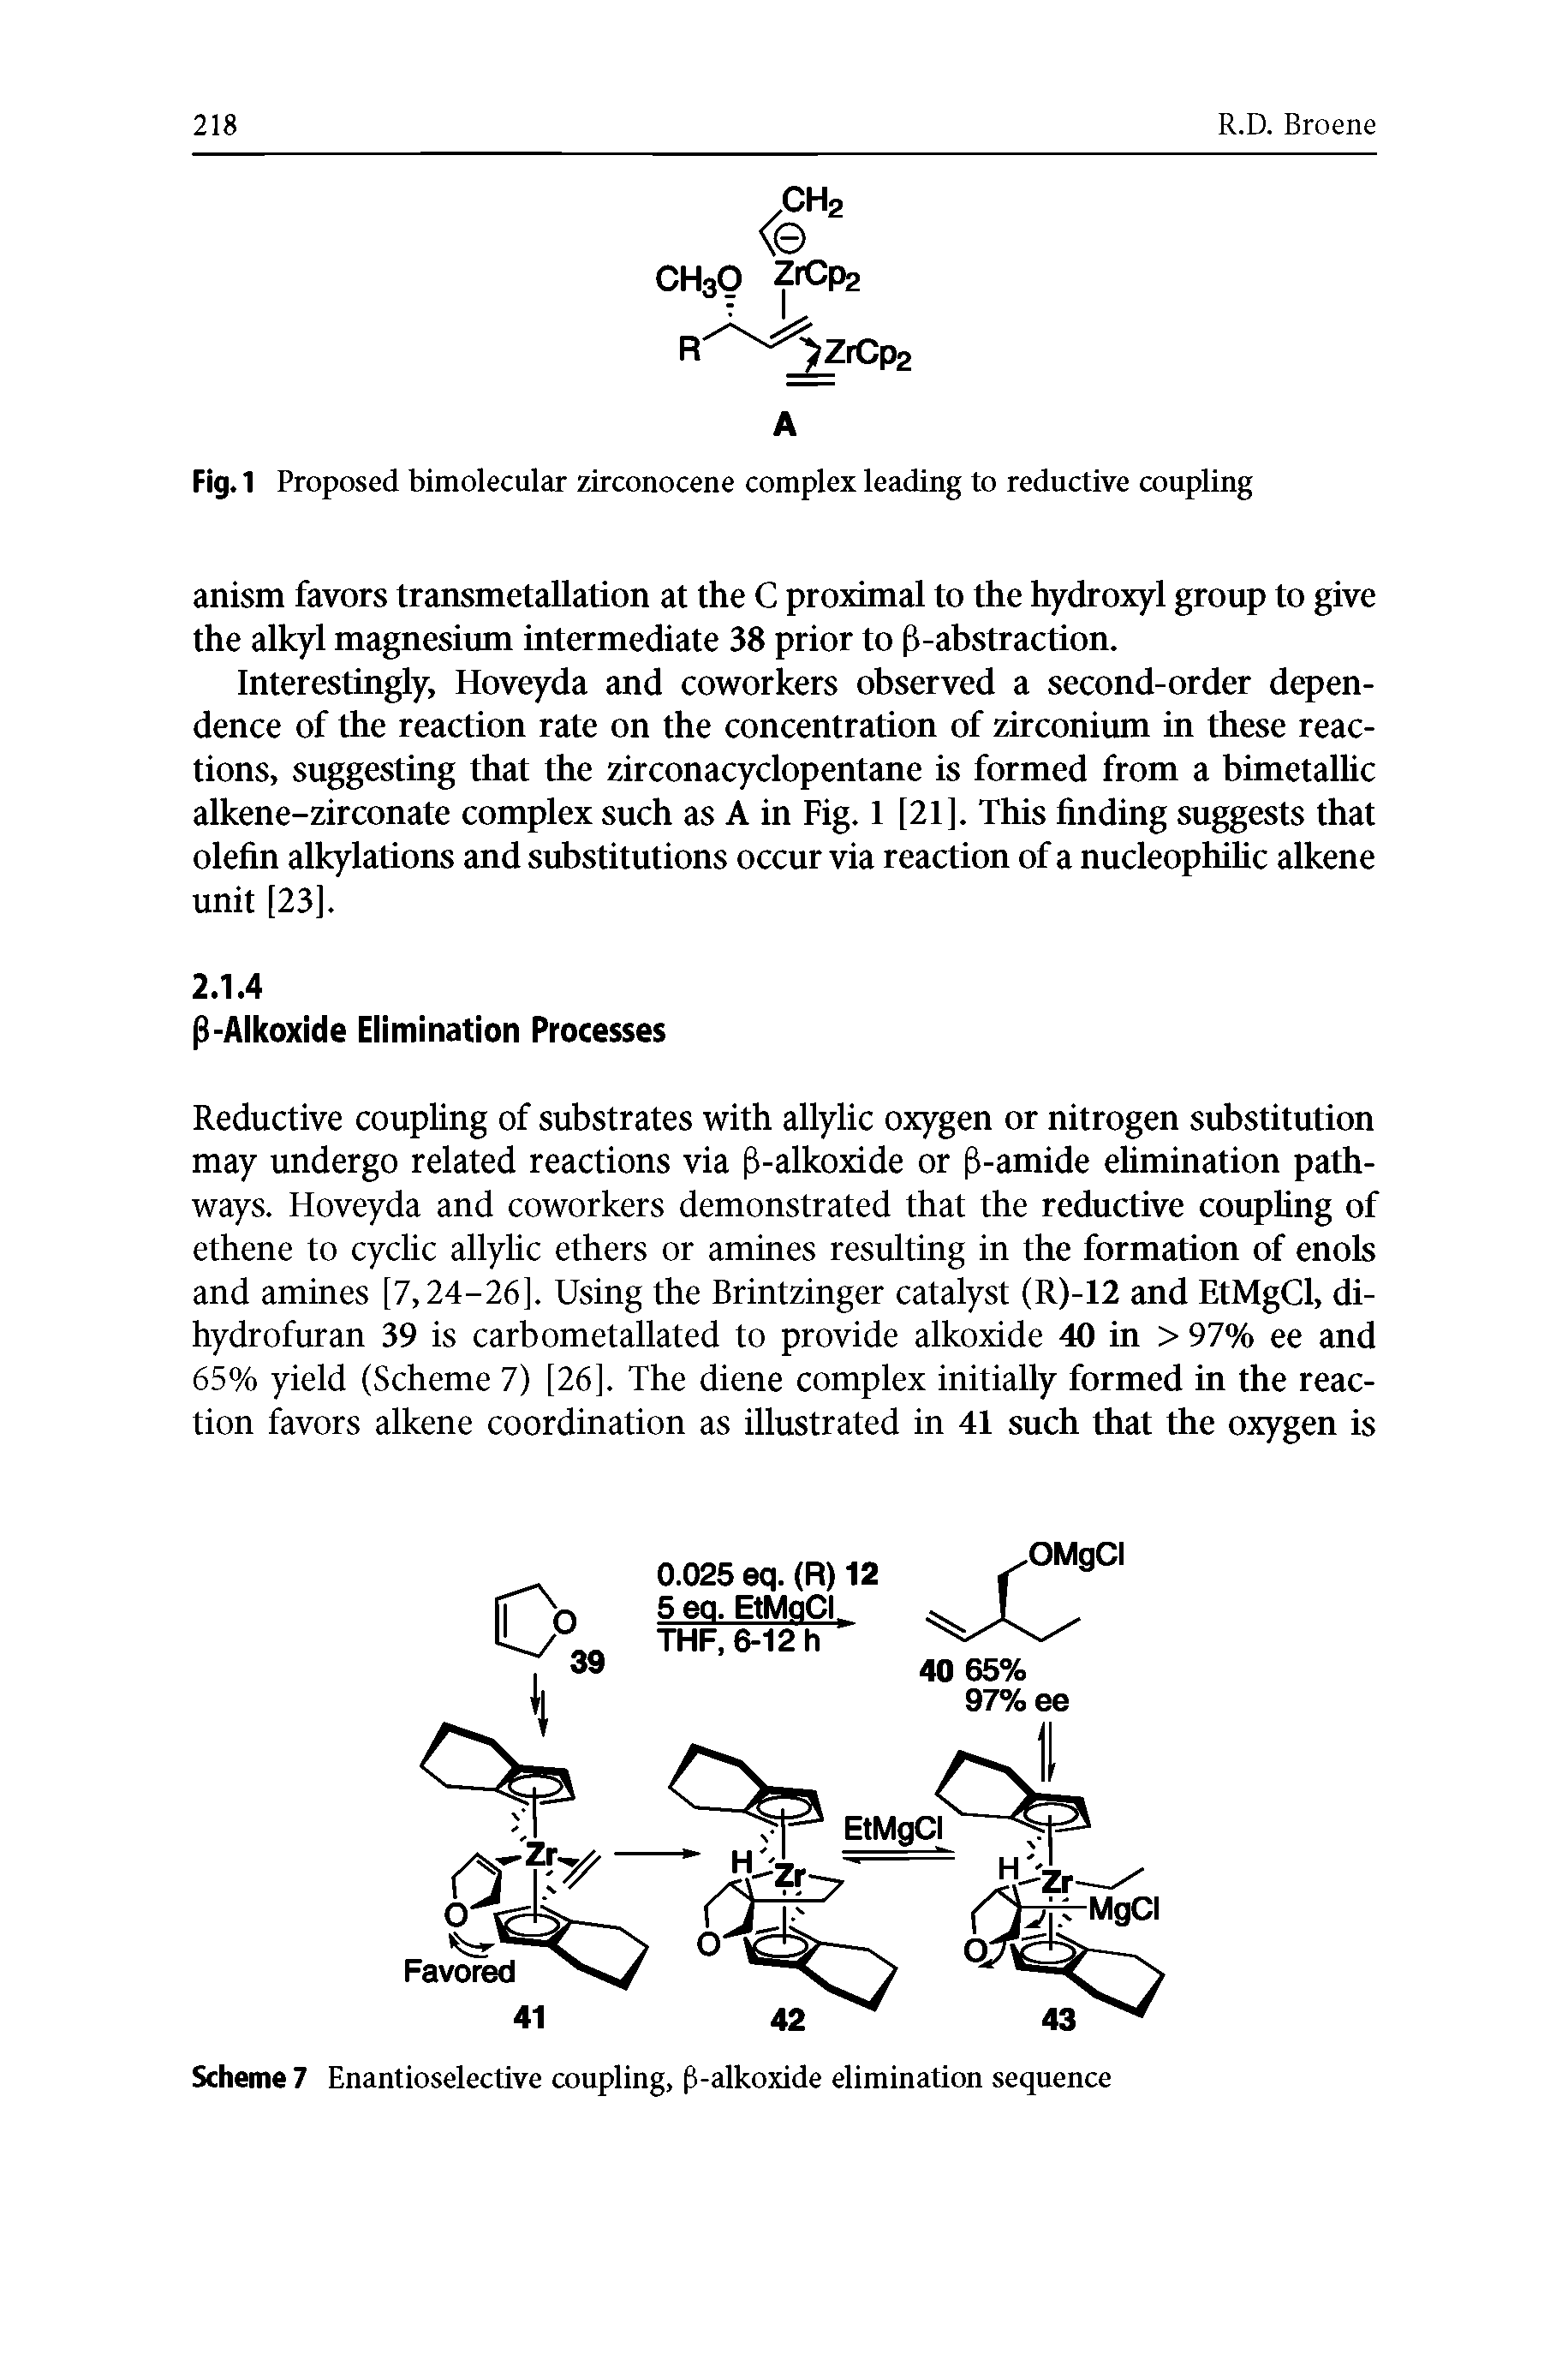 Fig. 1 Proposed bimolecular zirconocene complex leading to reductive coupling...